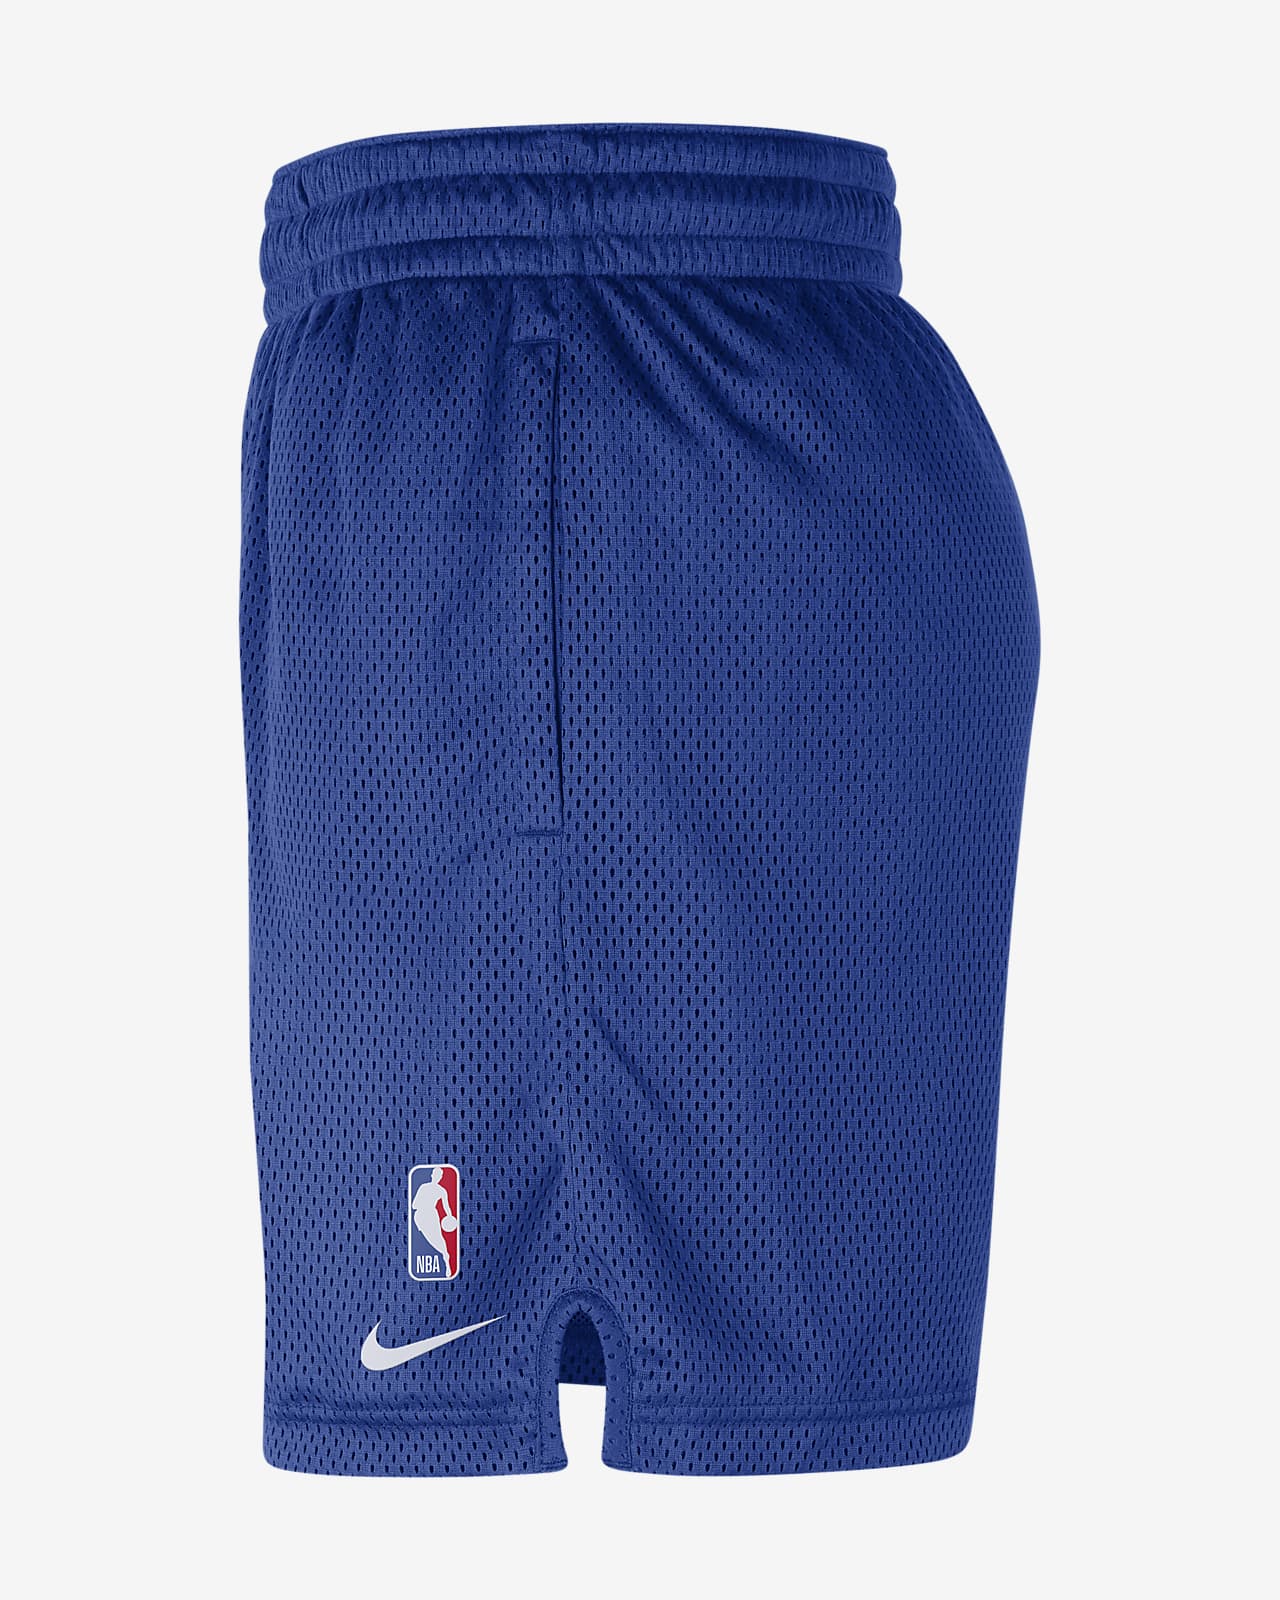 Cena herramienta bandeja New York Knicks Men's Nike NBA Shorts. Nike.com